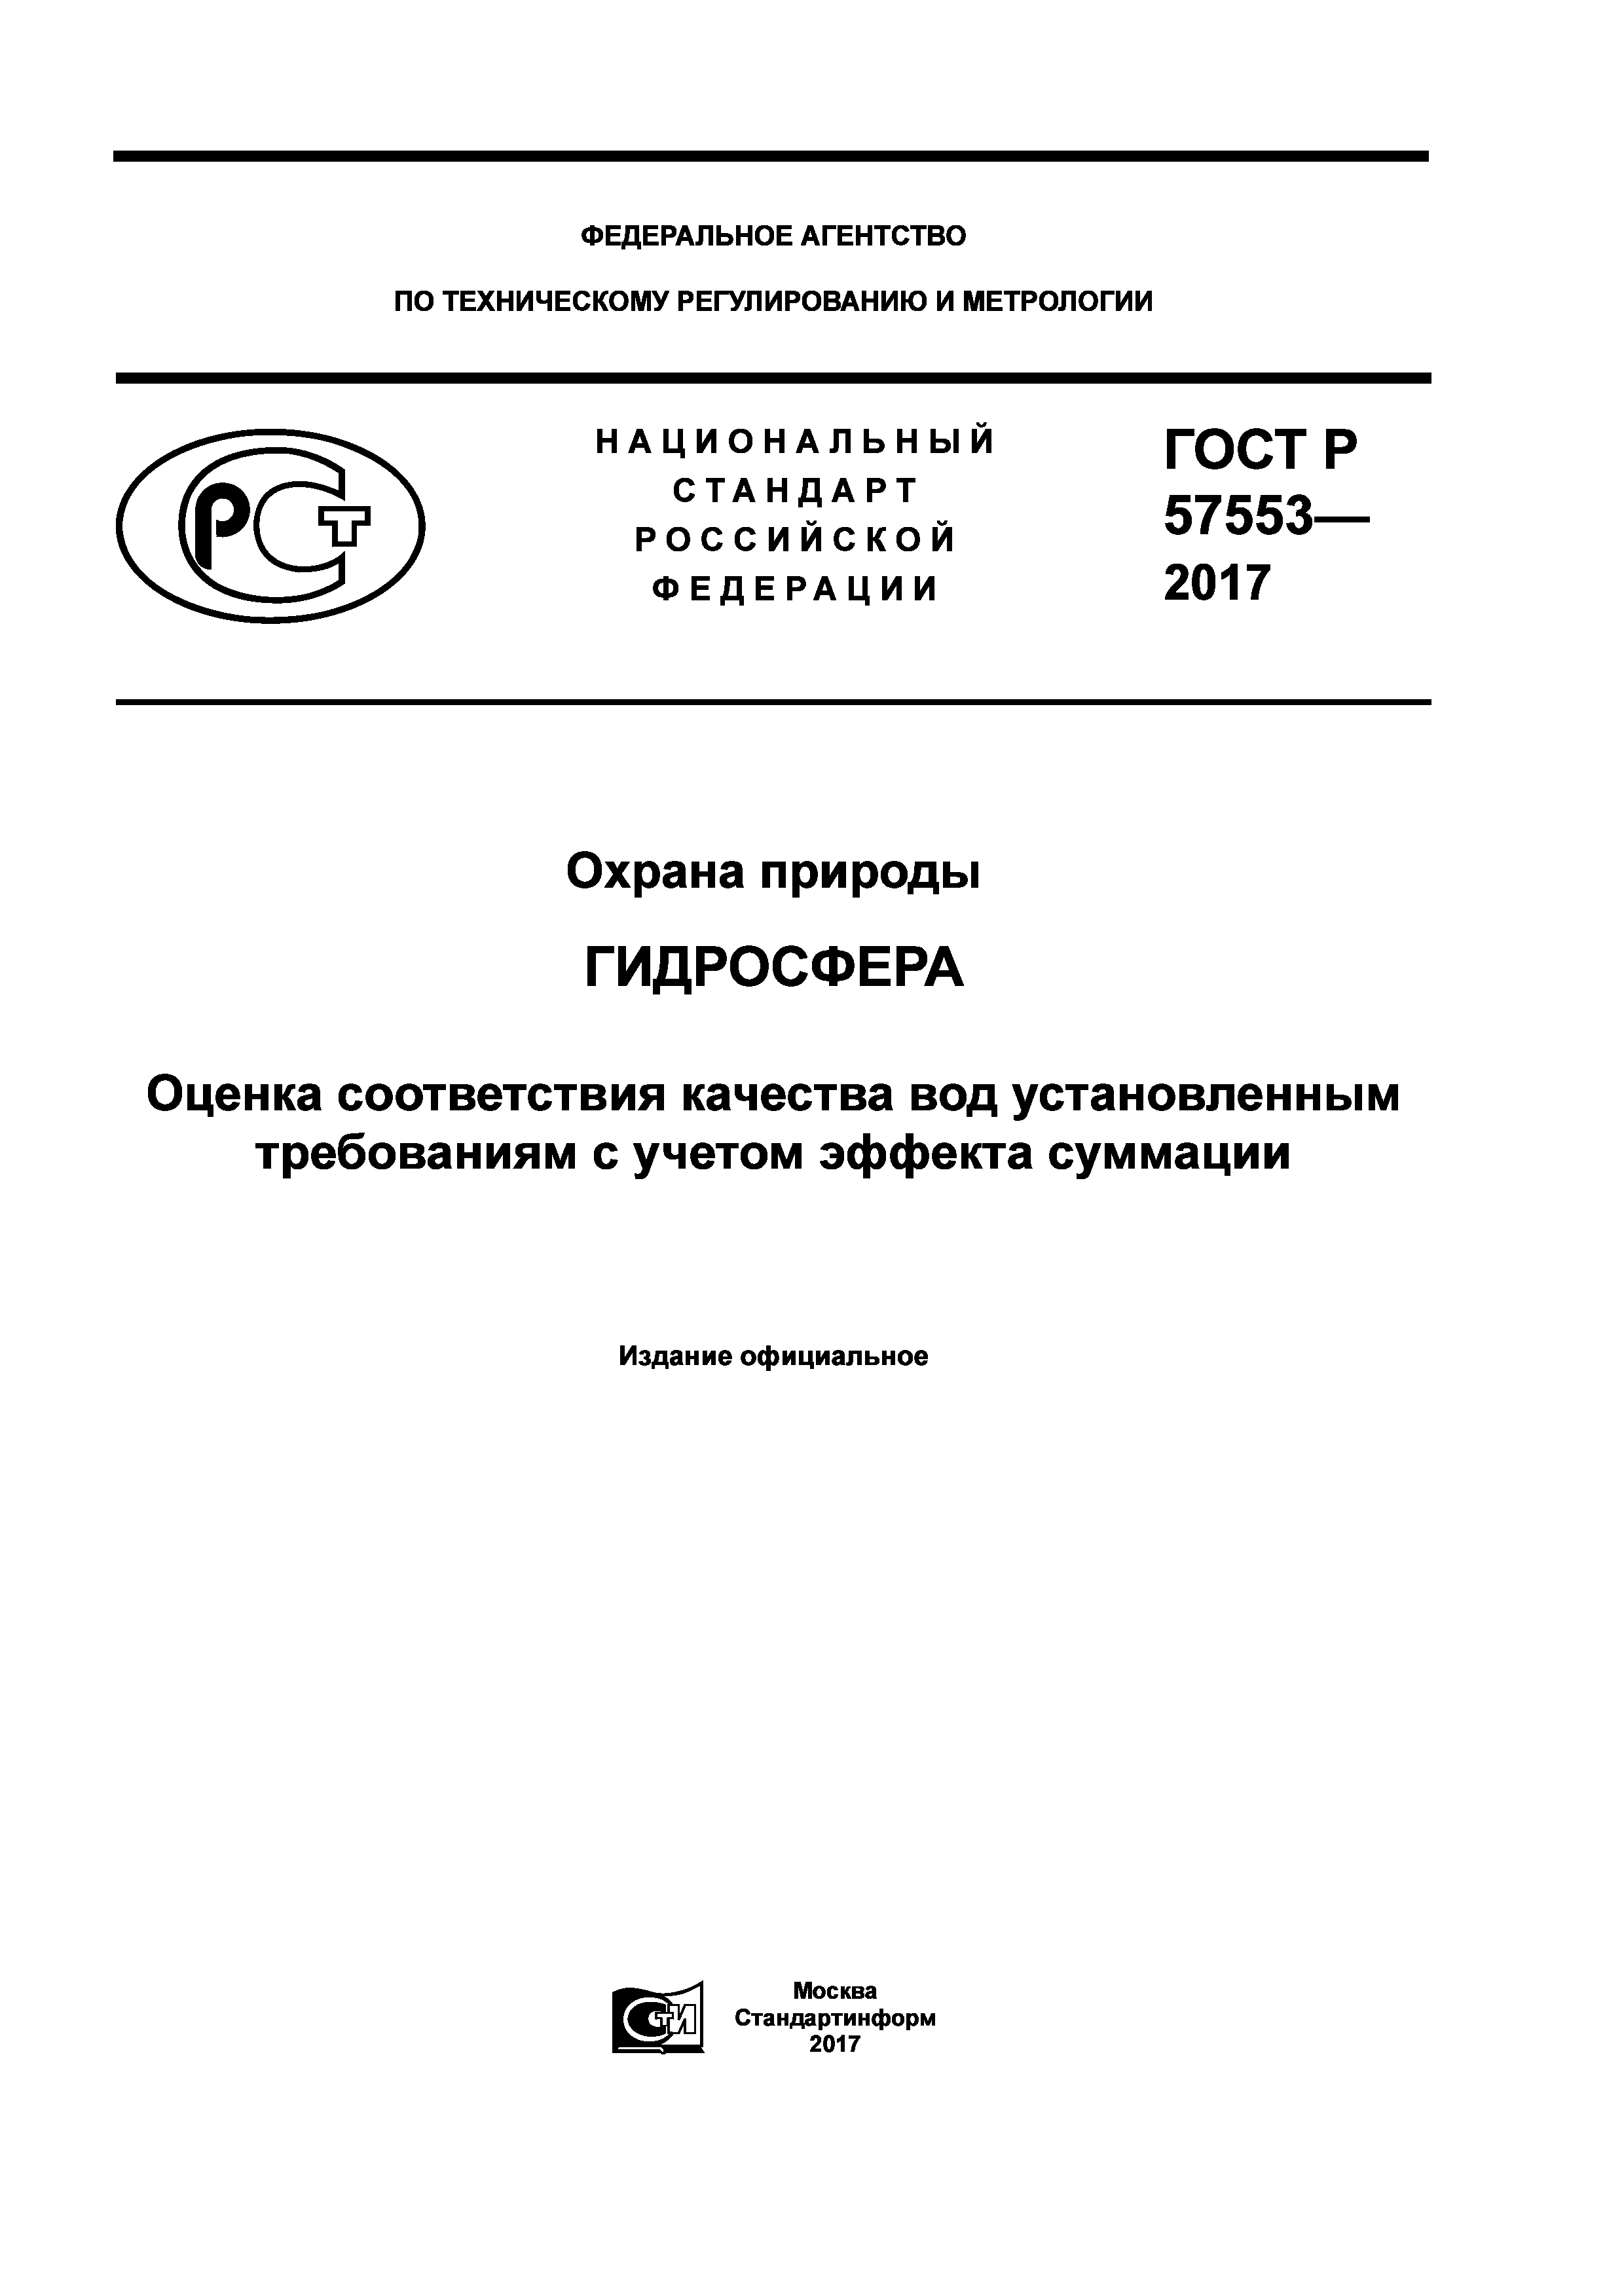 ГОСТ Р 57553-2017